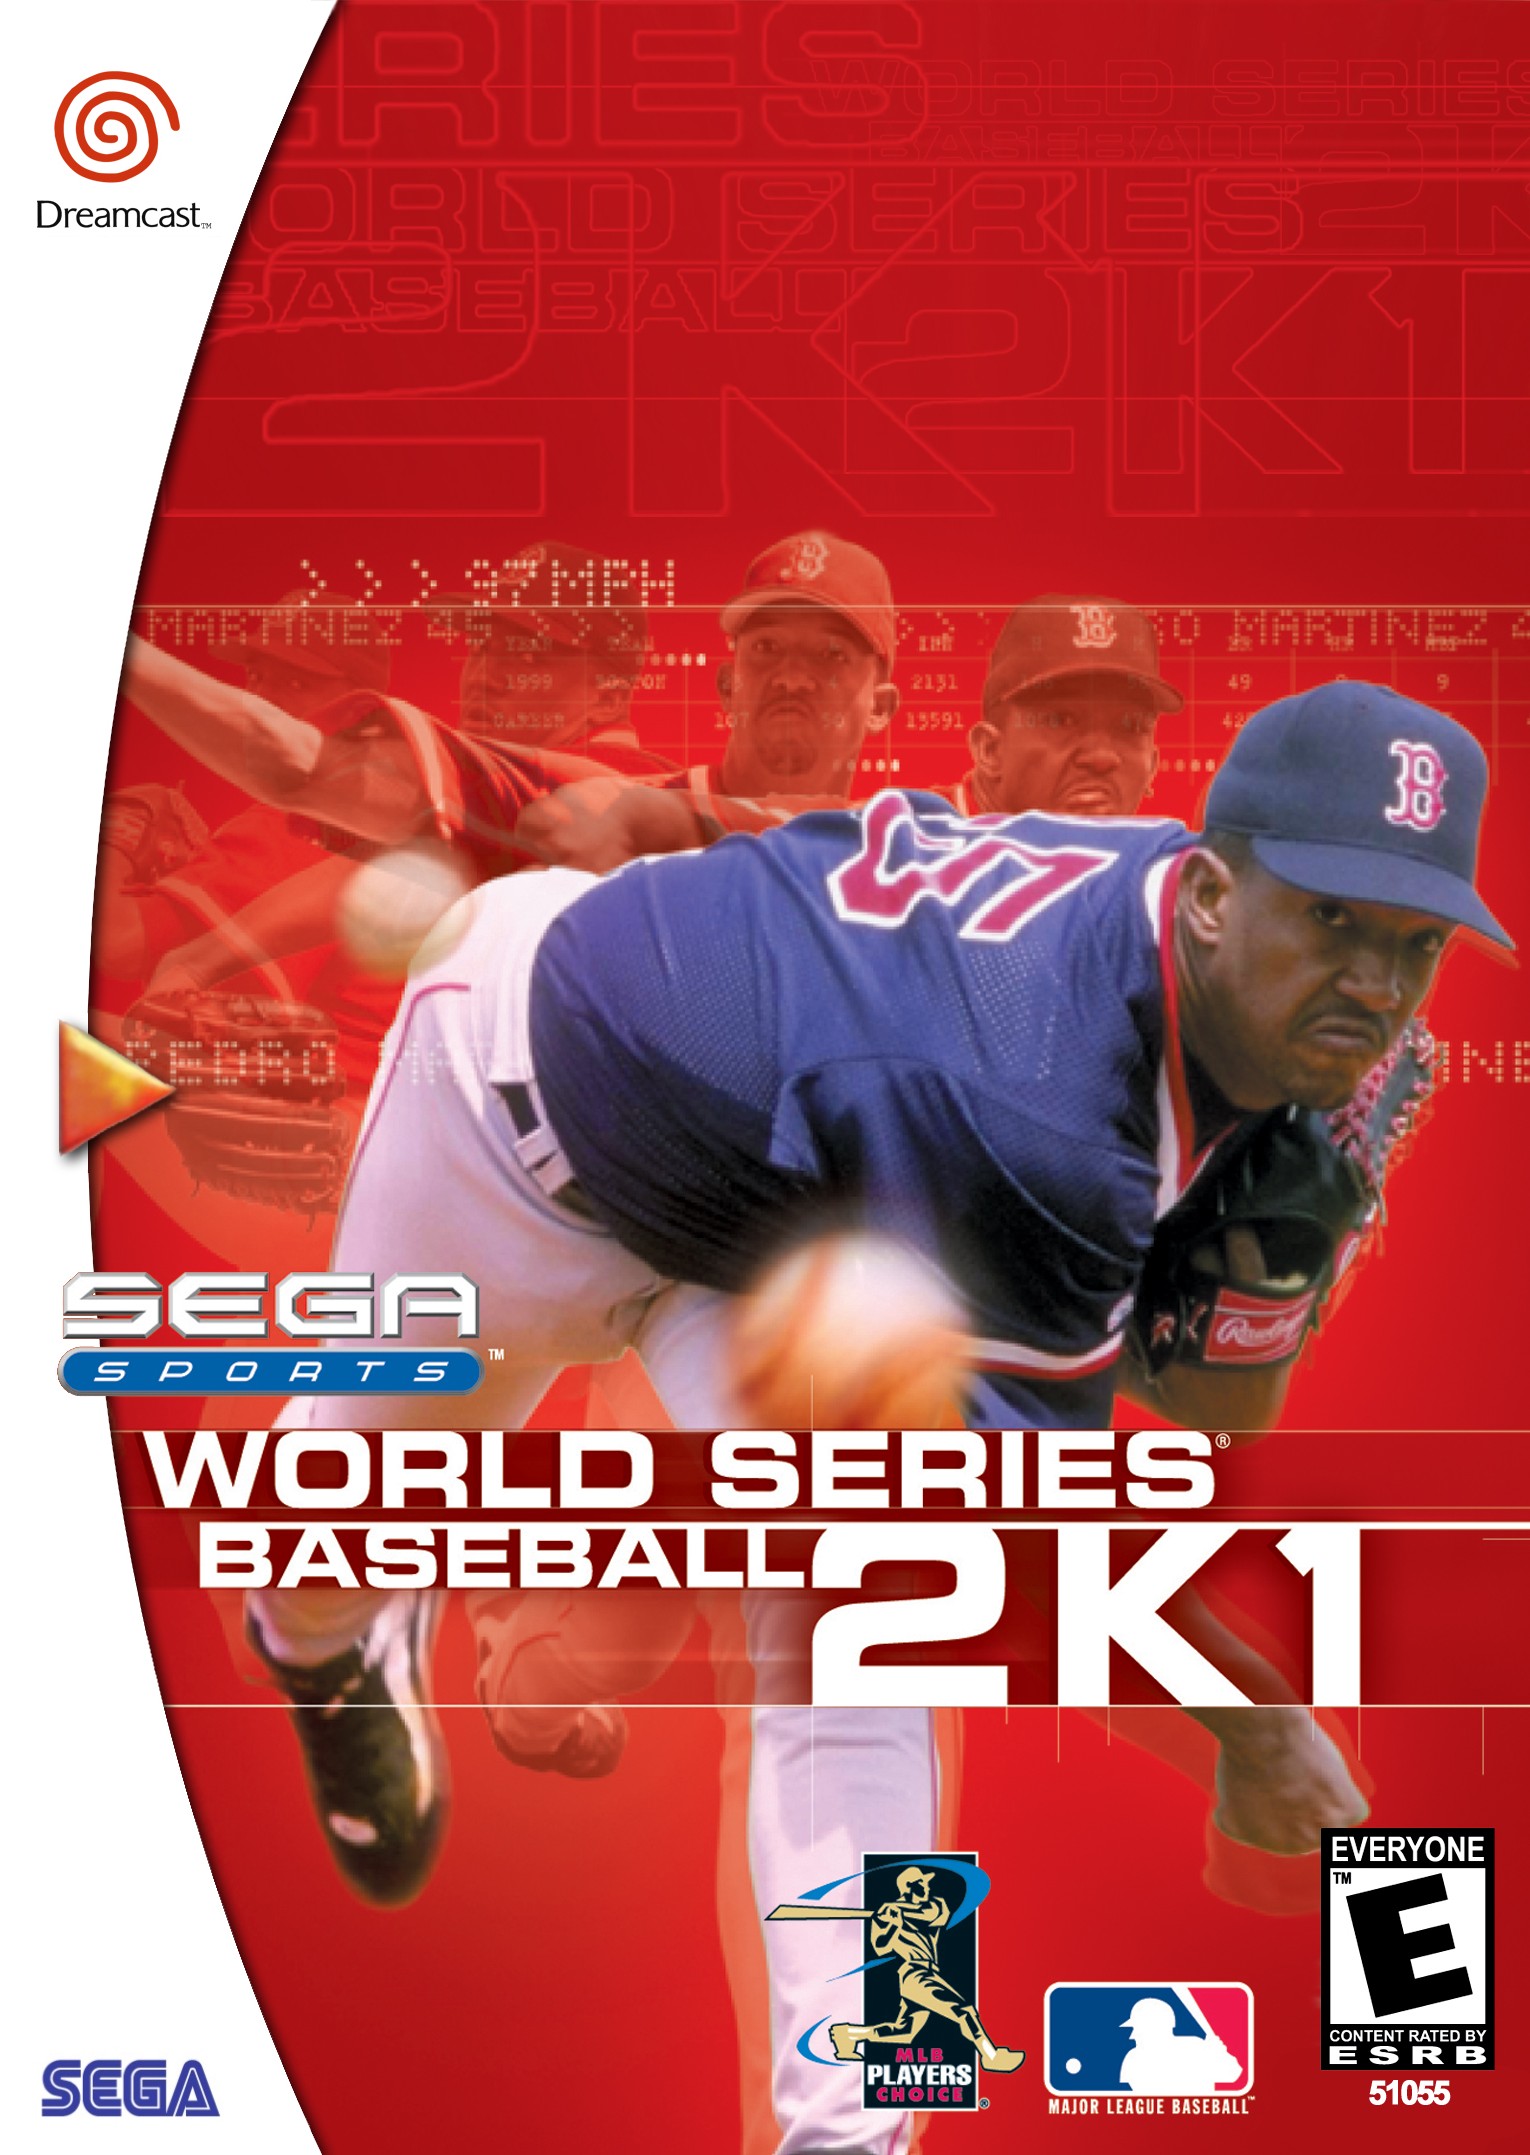 'World Series 2k1'